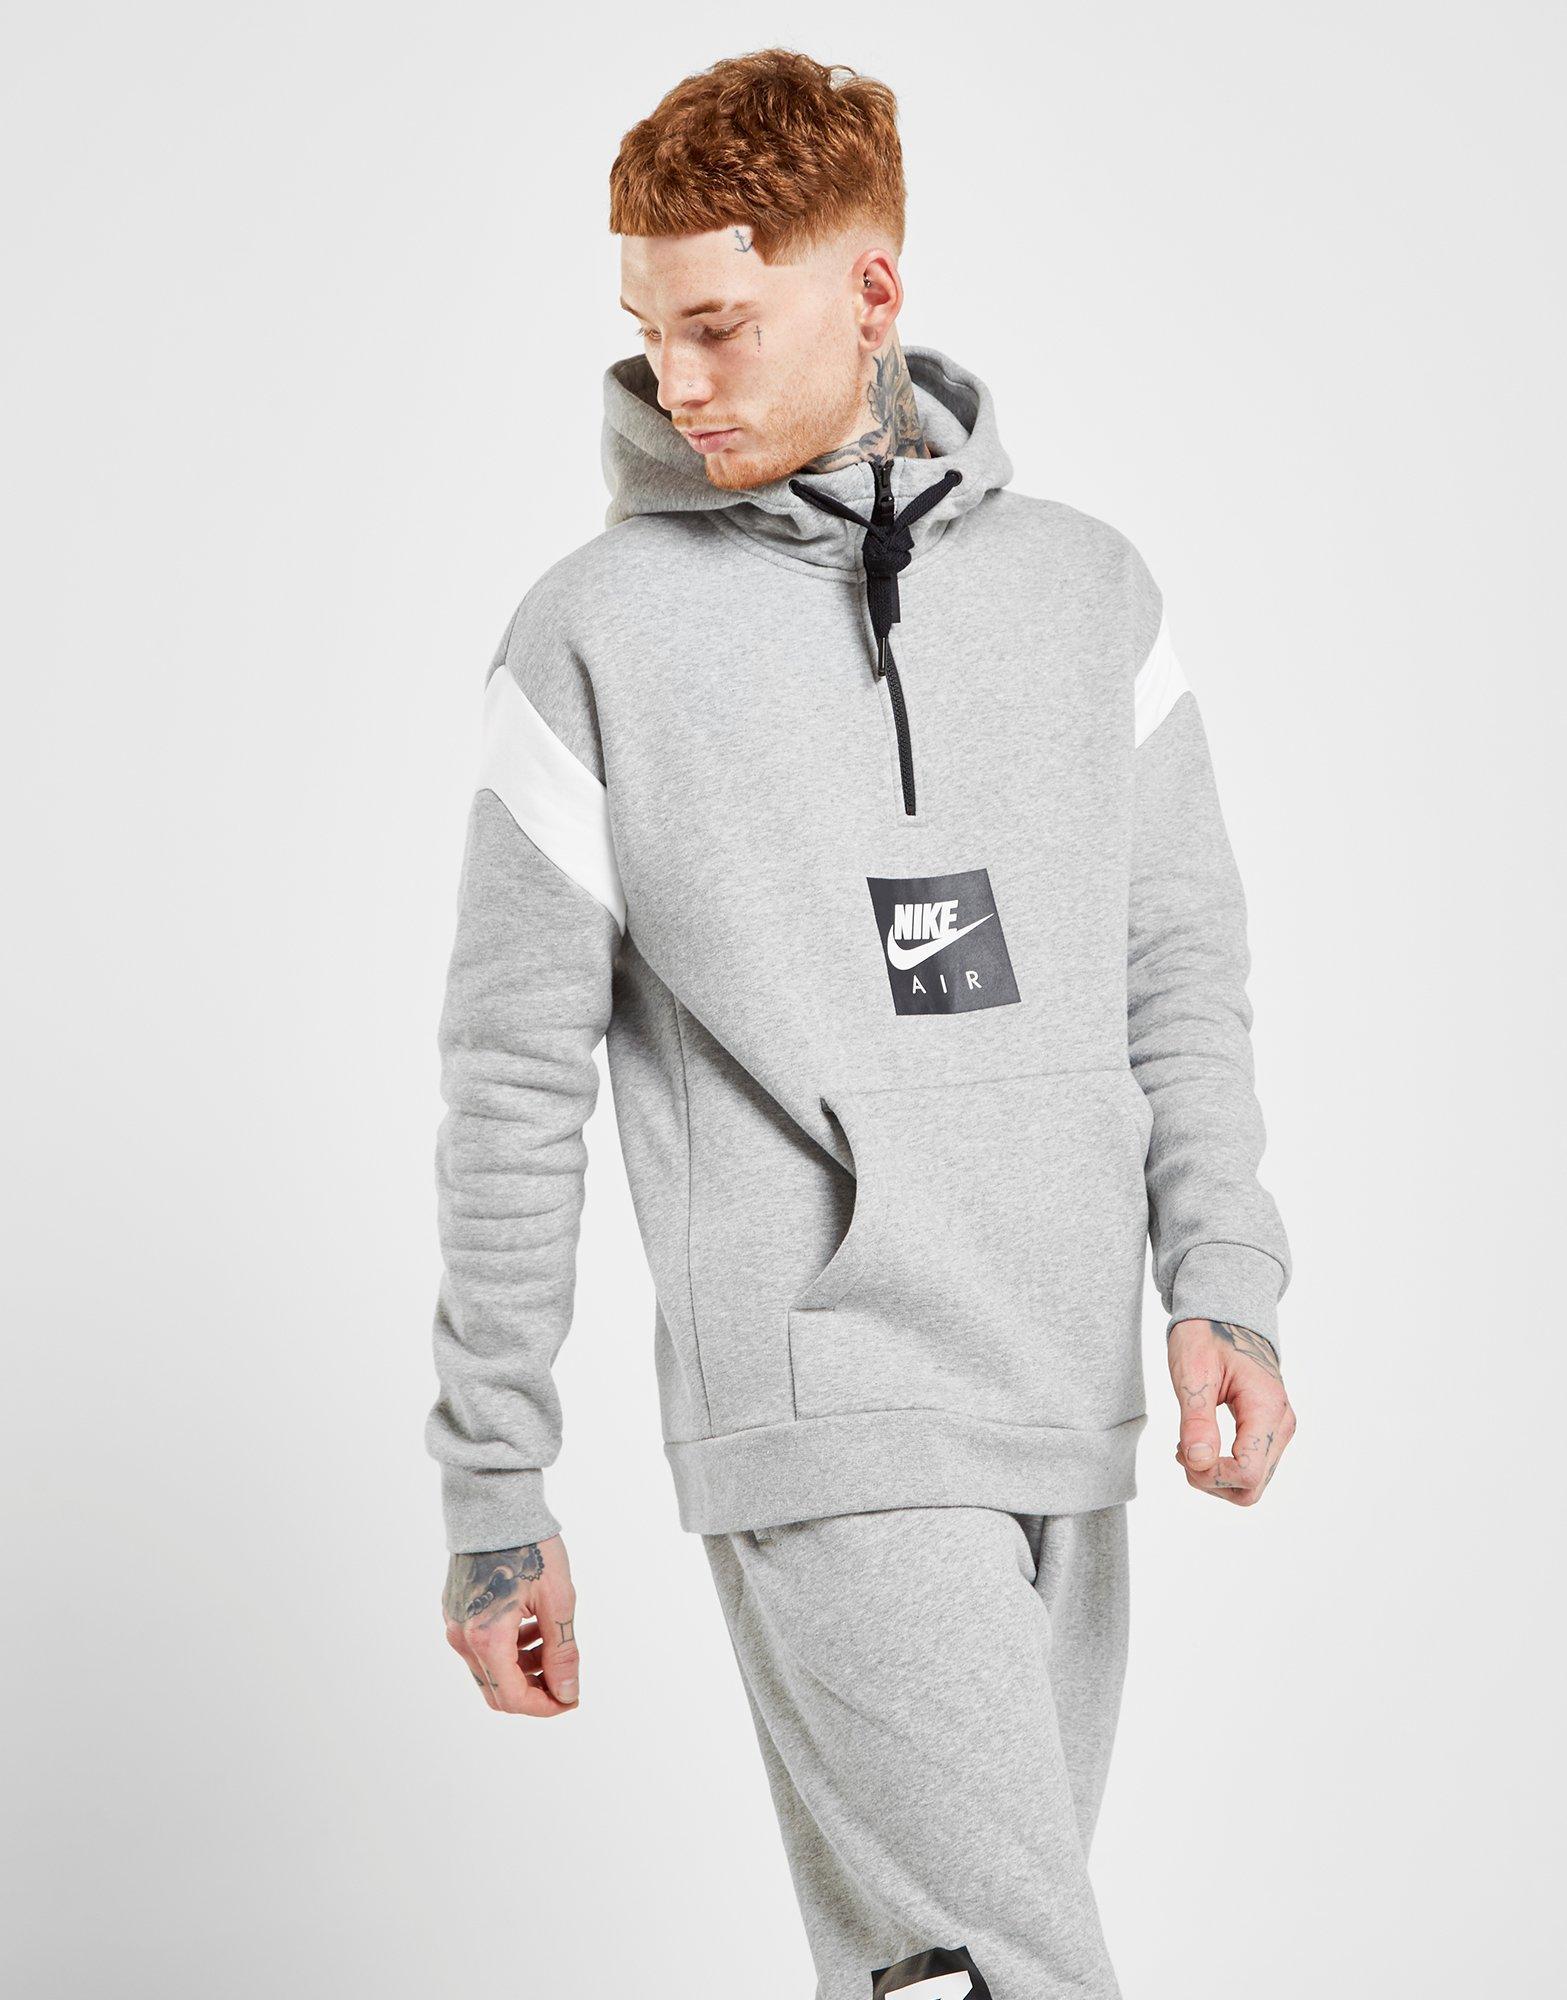 Nike Air 1/2 Zip Fleece Hoodie in Grey (Gray) for Men - Lyst